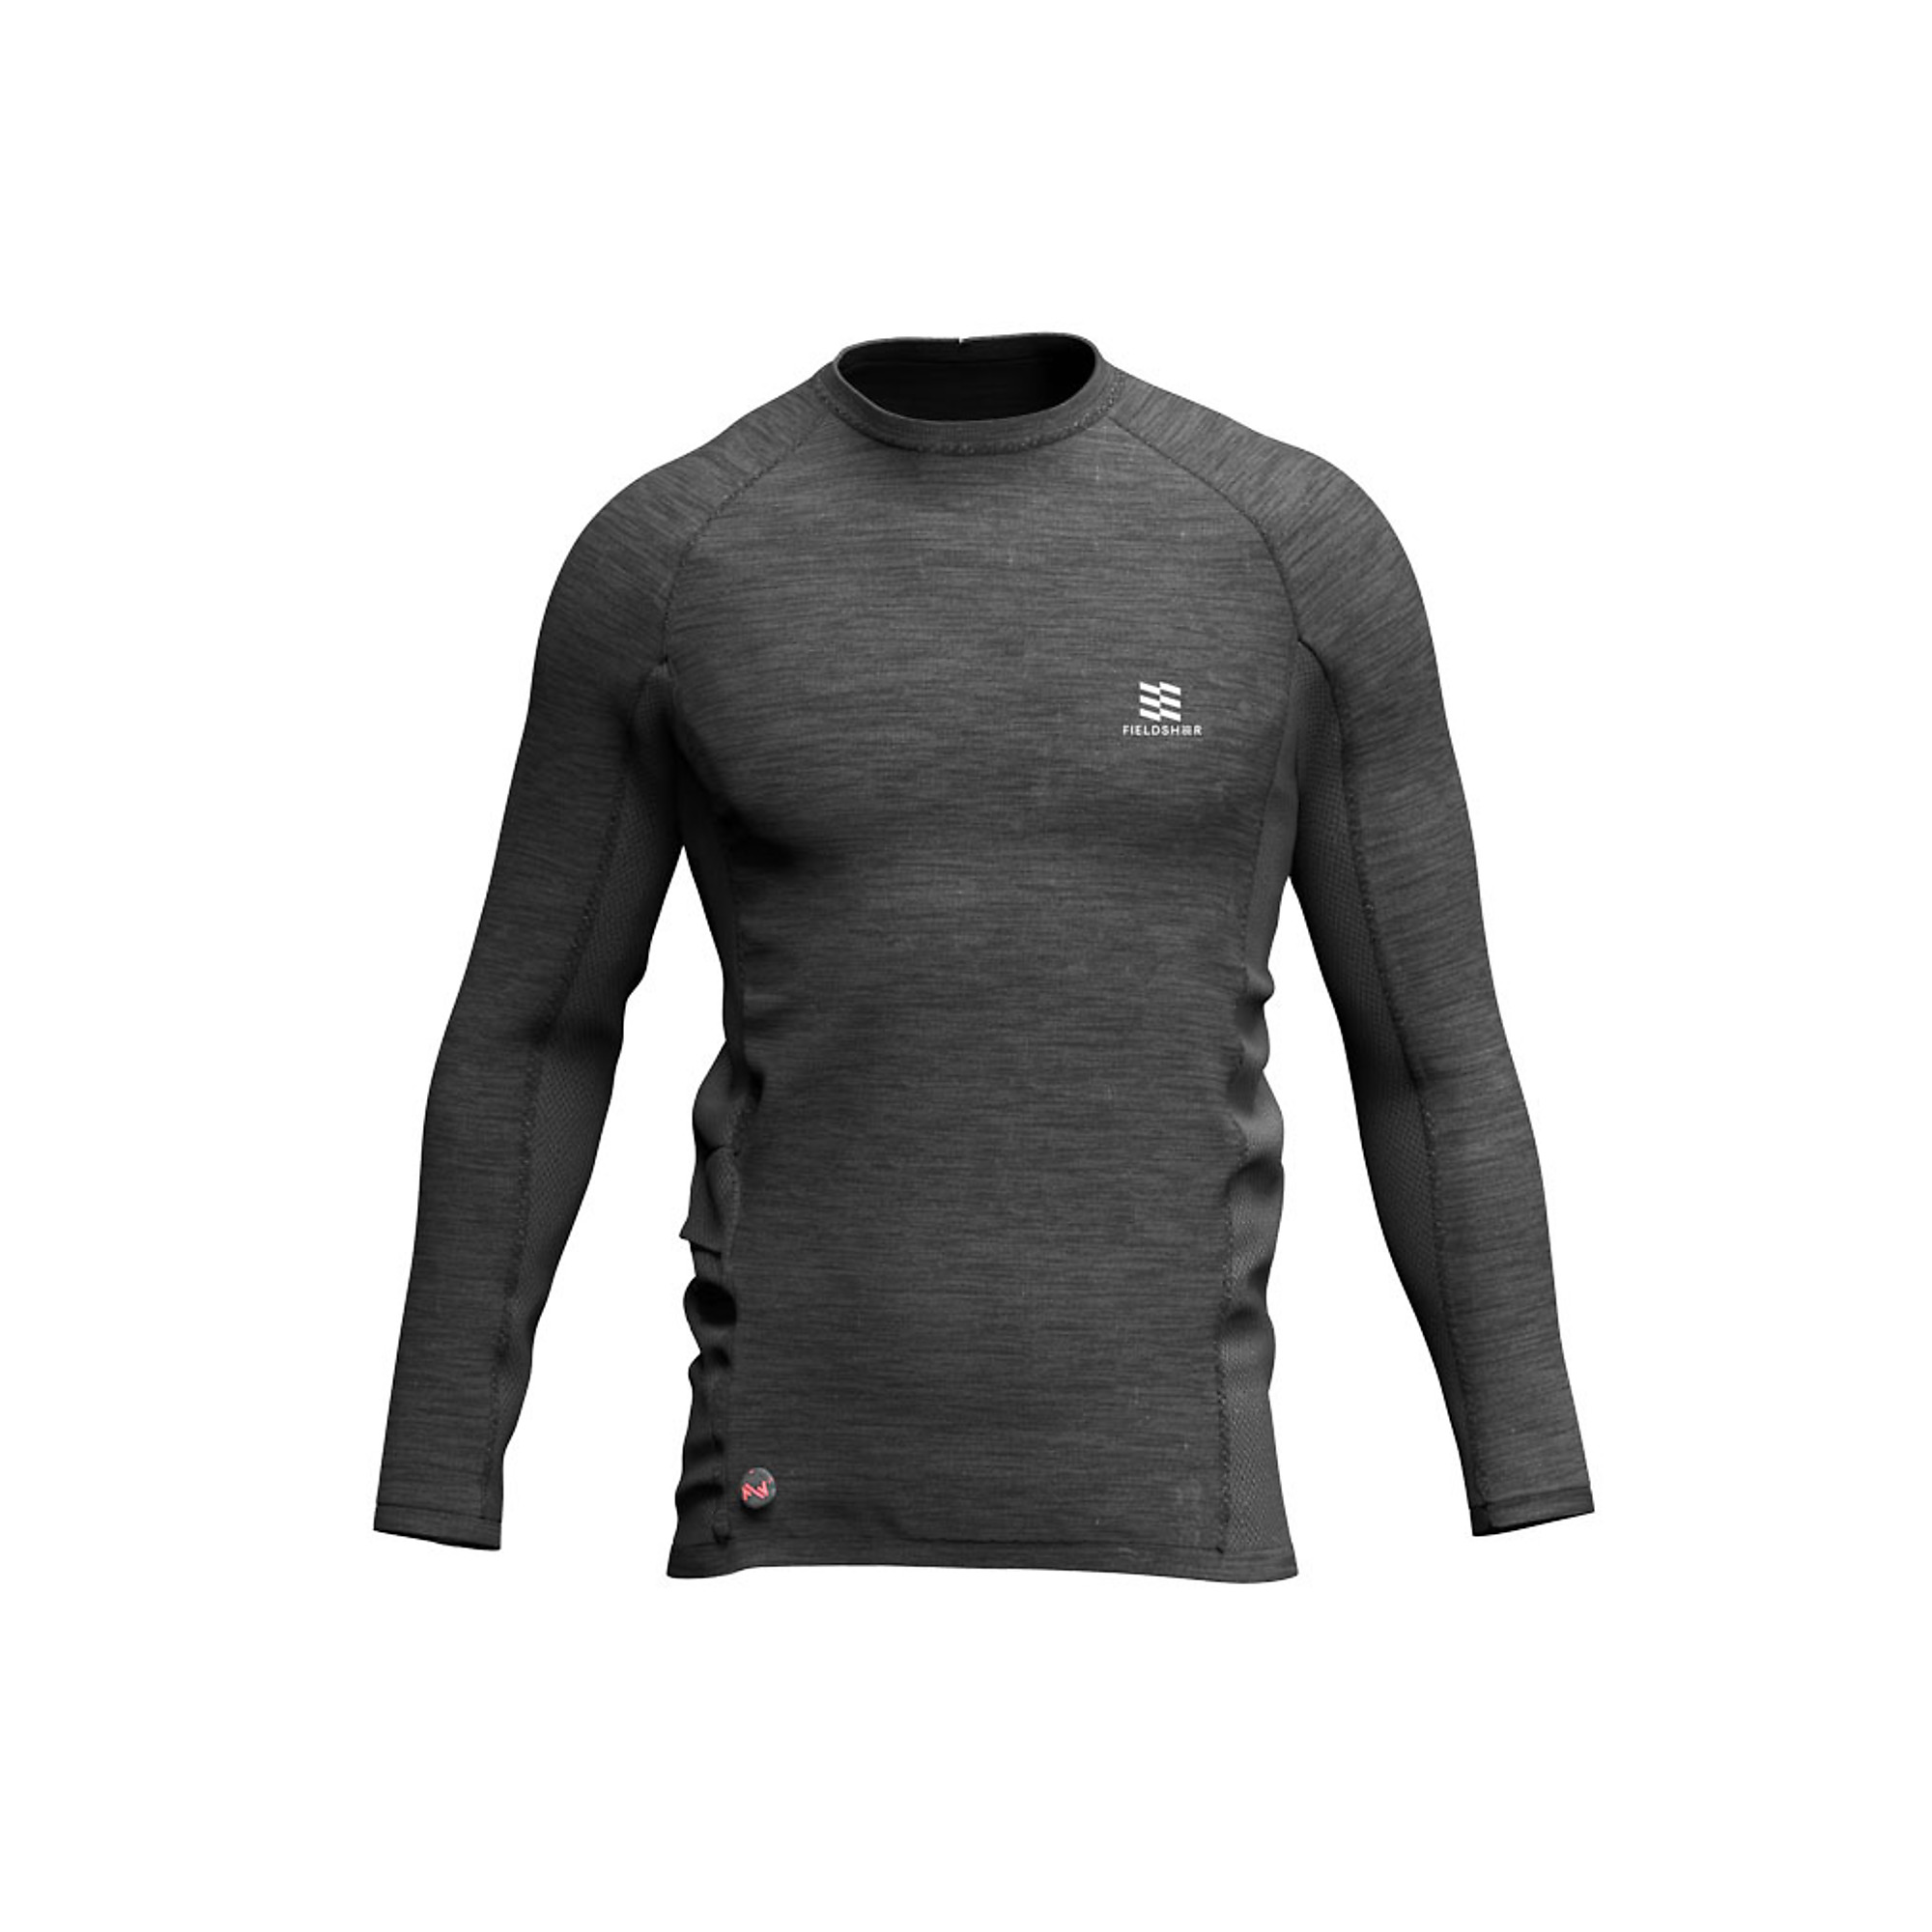 Fieldsheer, Men's Primer Heated Baselayer Shirt, Size S, Color Black, Model MWMT11010220